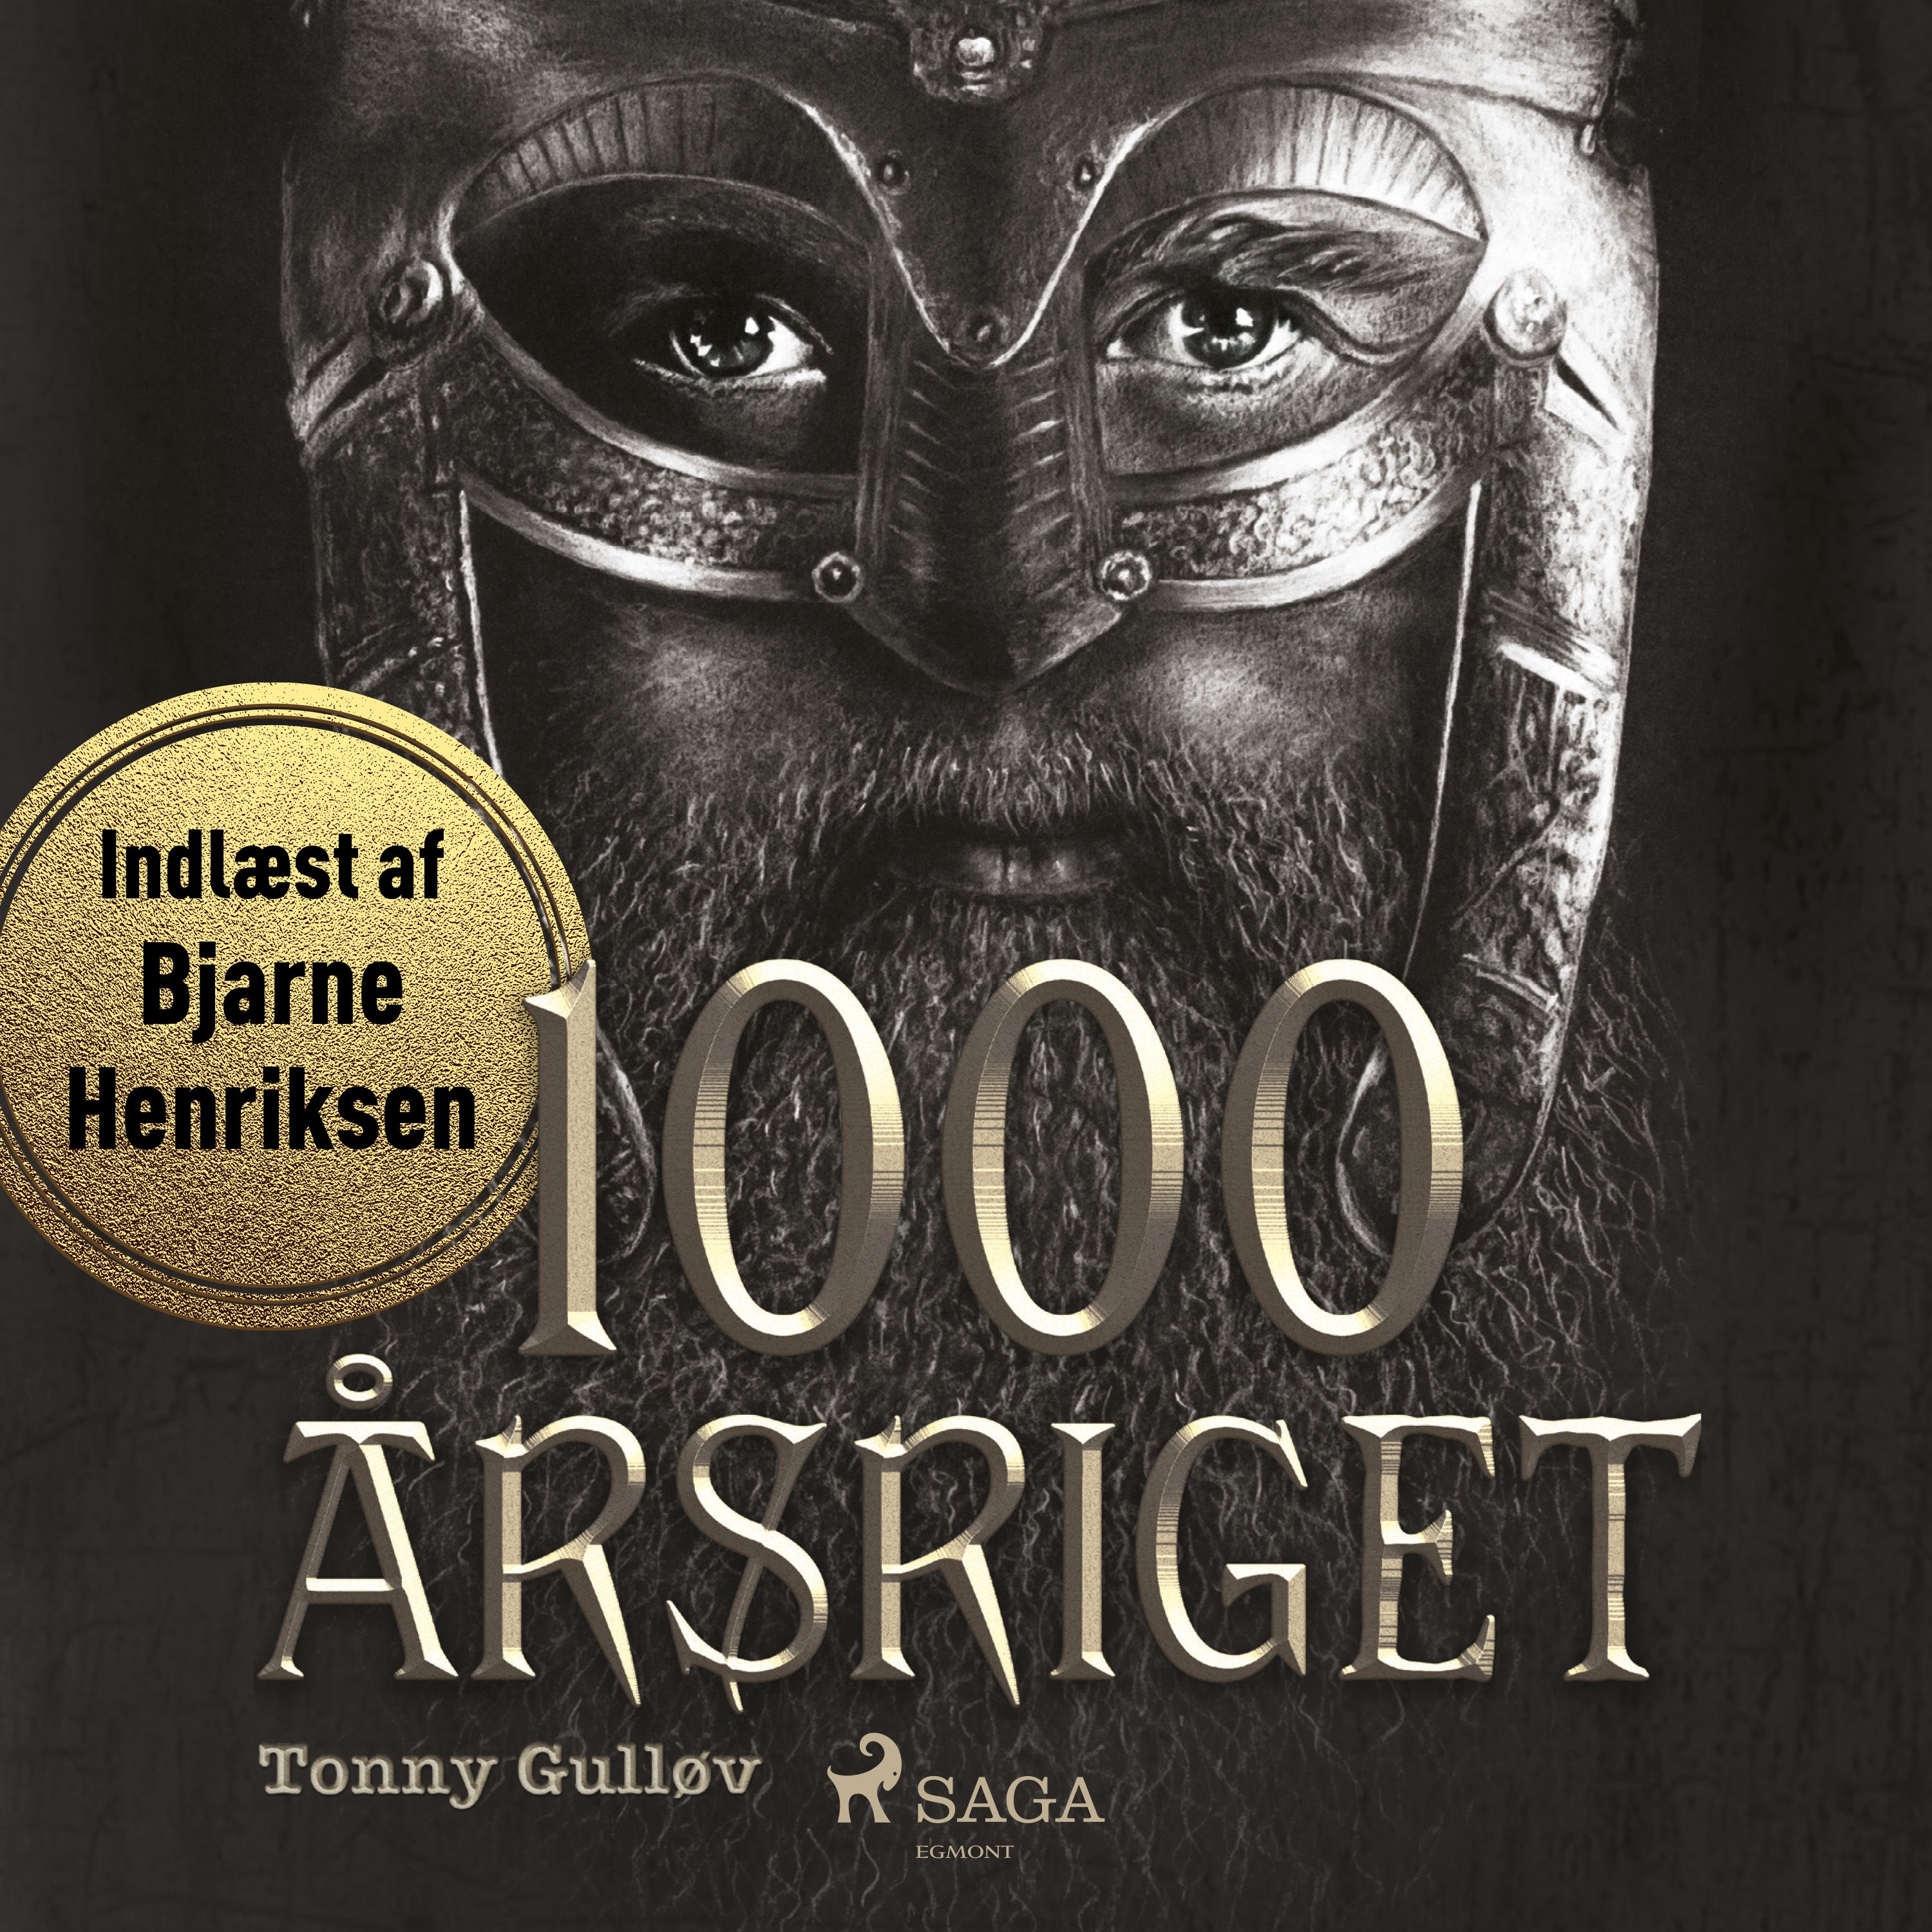 1000-årsriget, lydbog af Tonny Gulløv